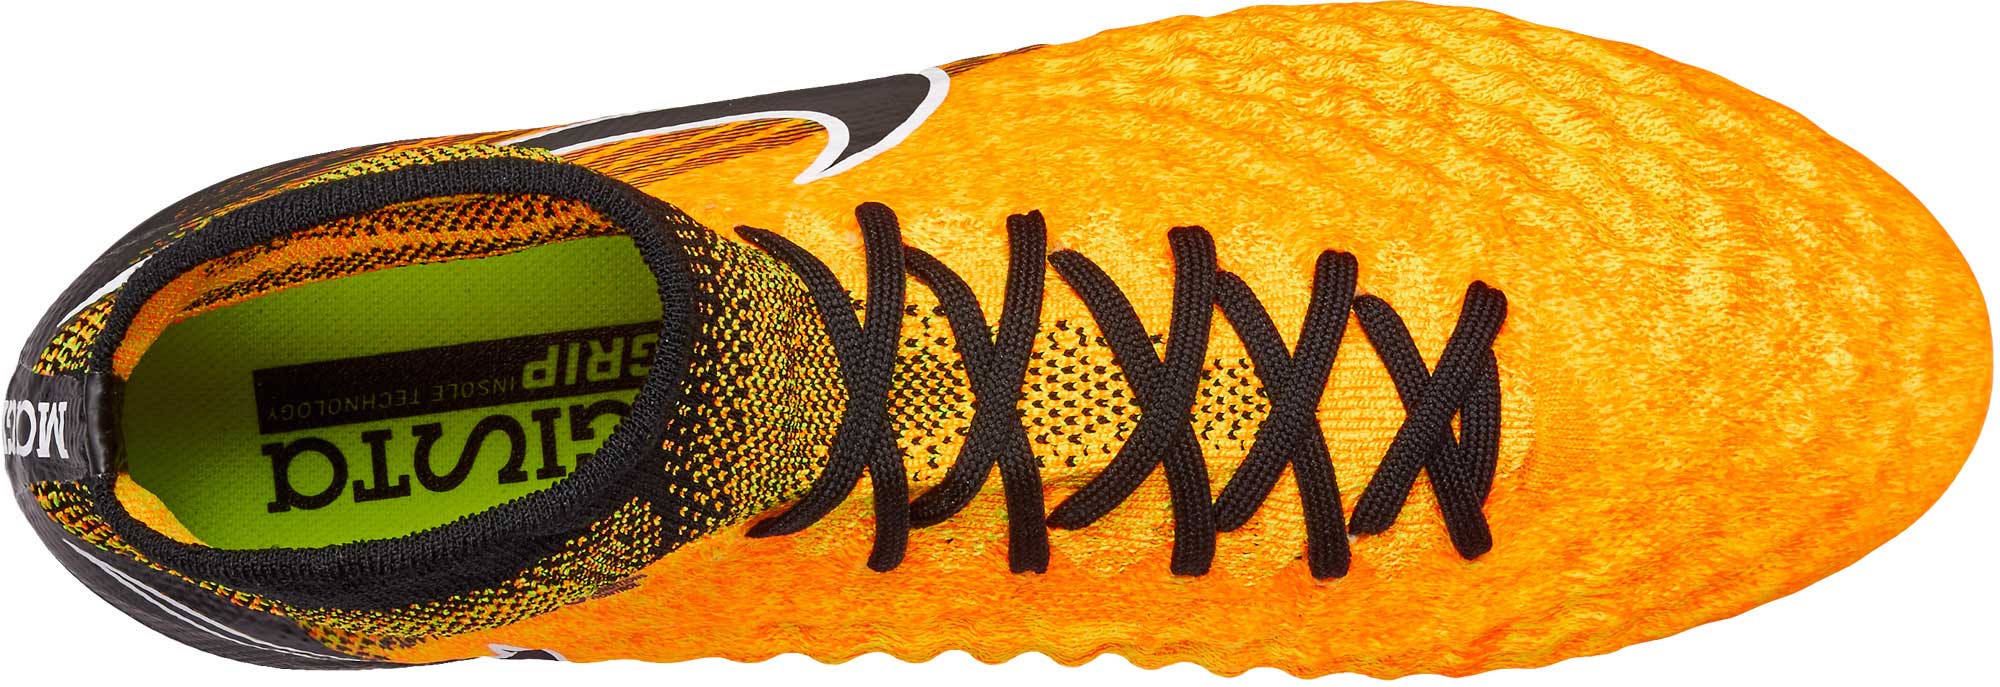 Nike Magista Obra II - Orange Cleats